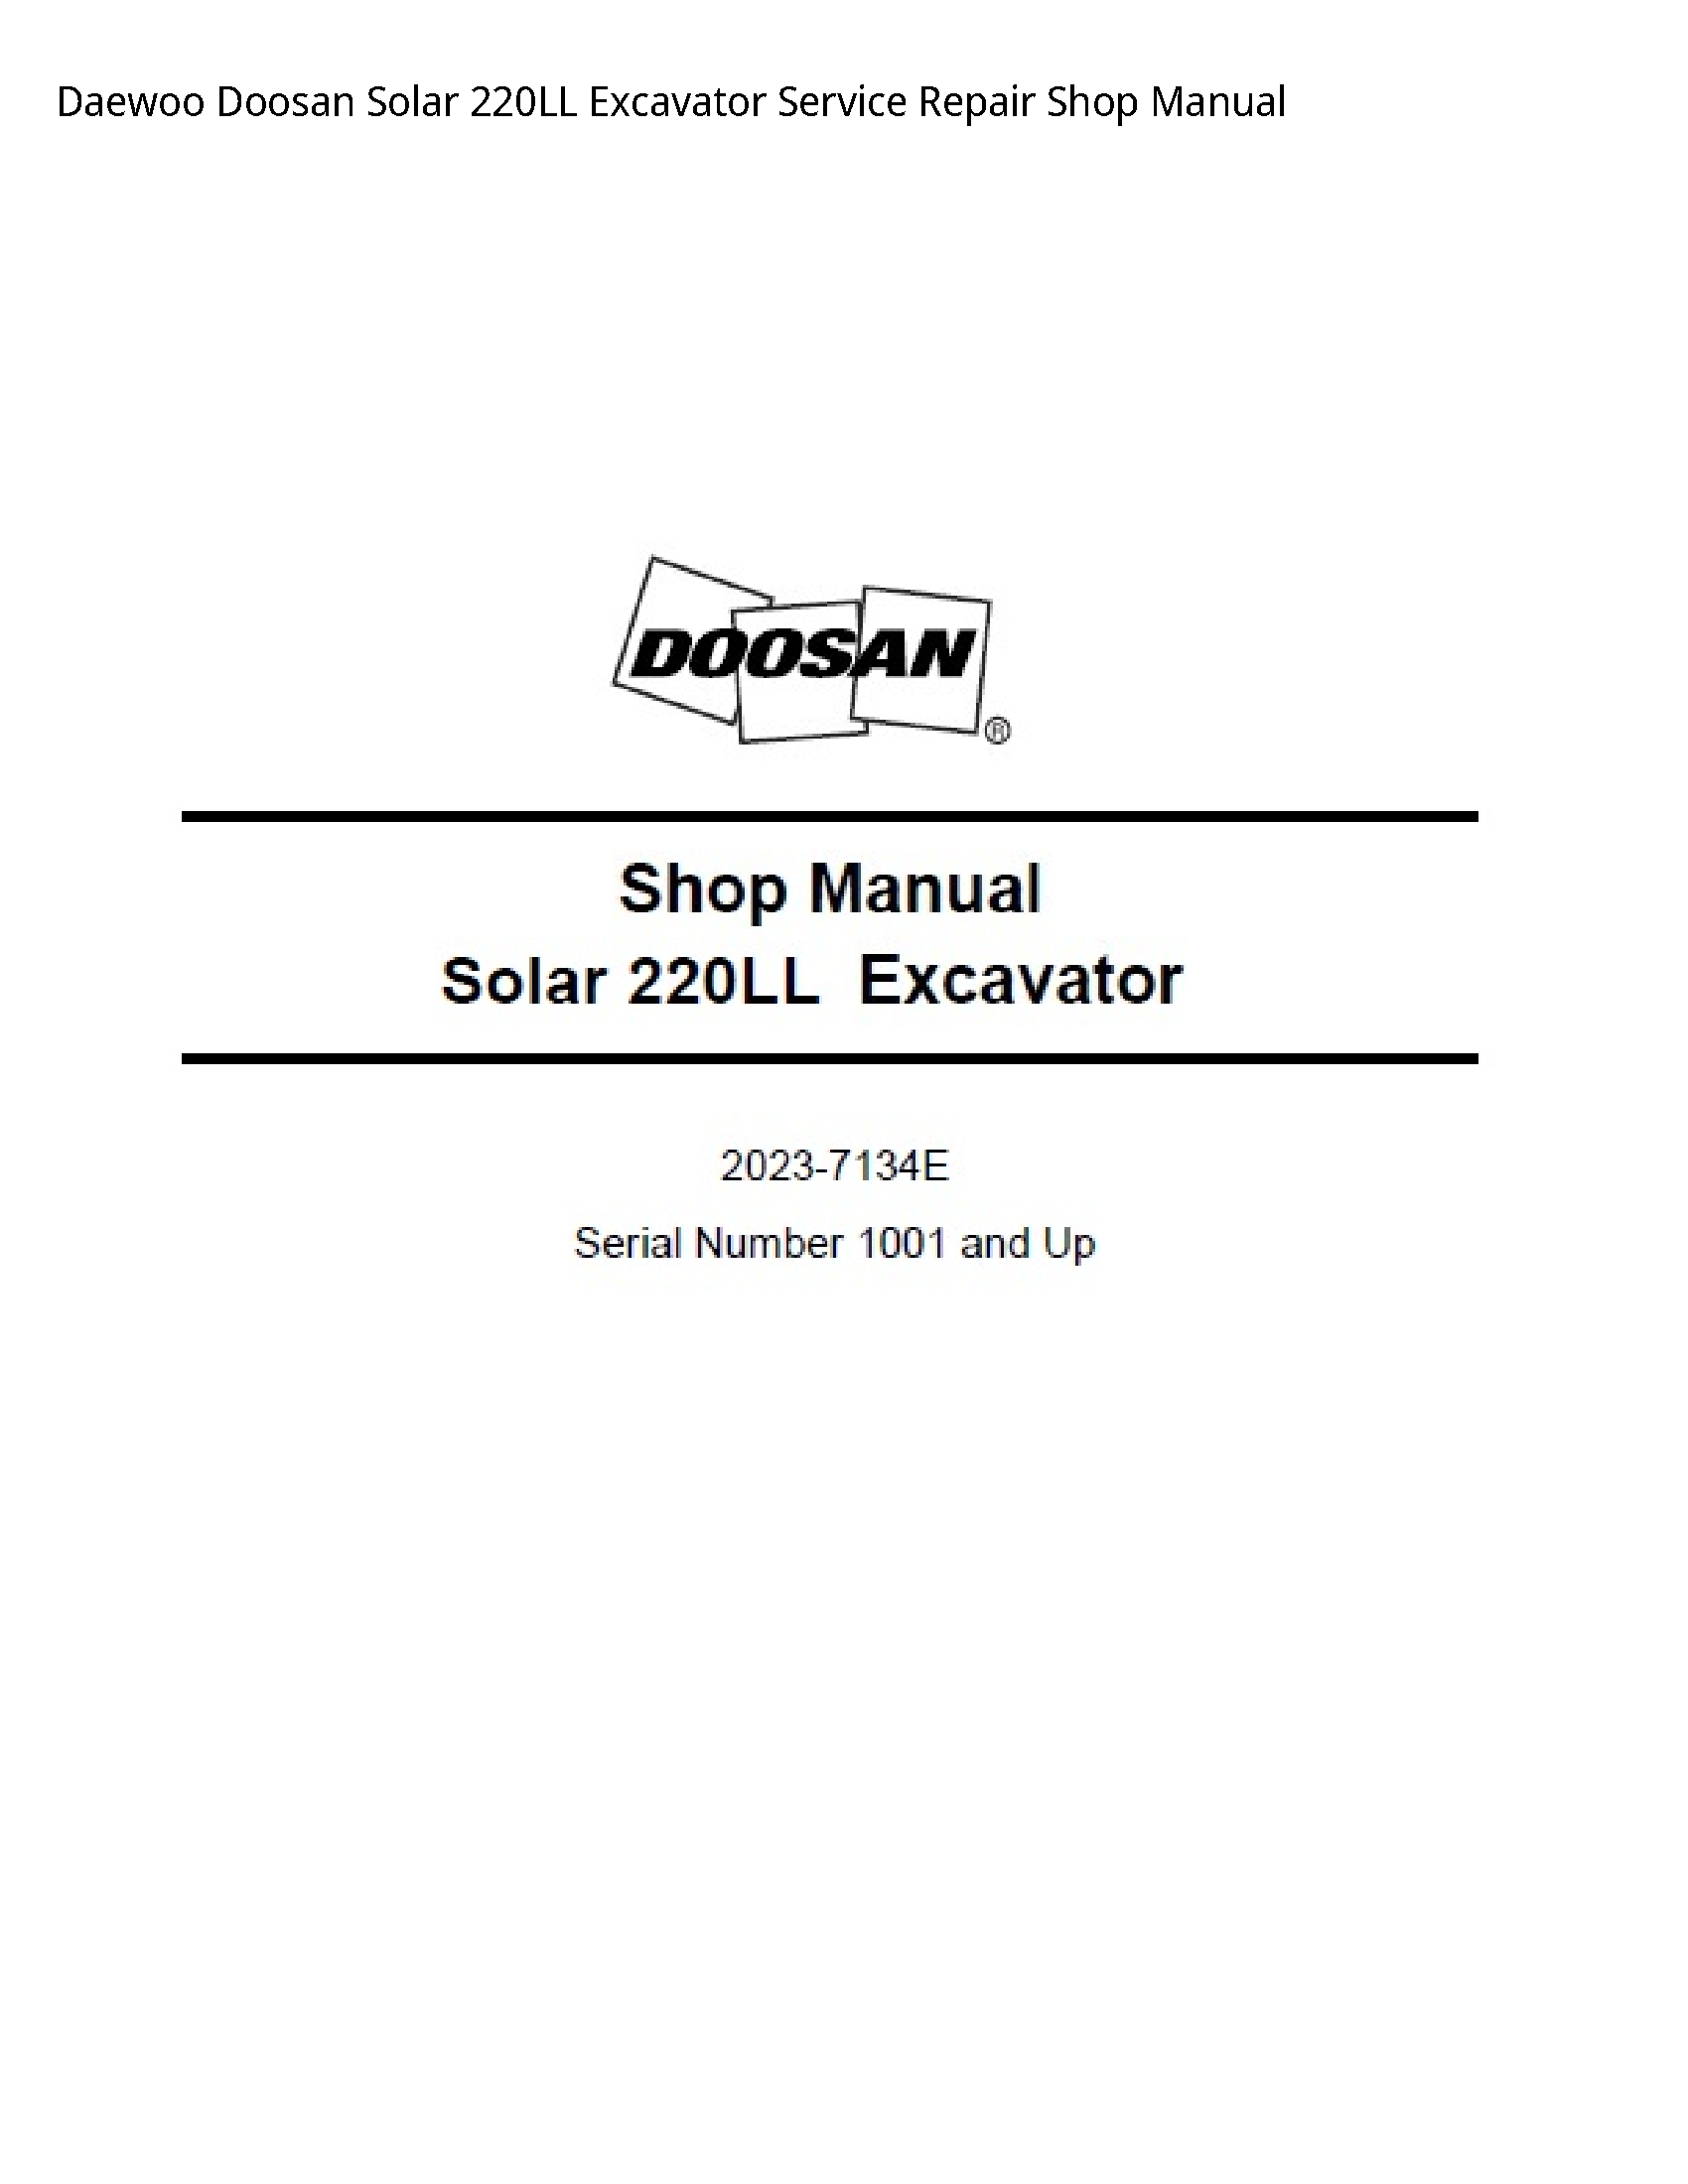 Daewoo Doosan 220LL Solar Excavator manual